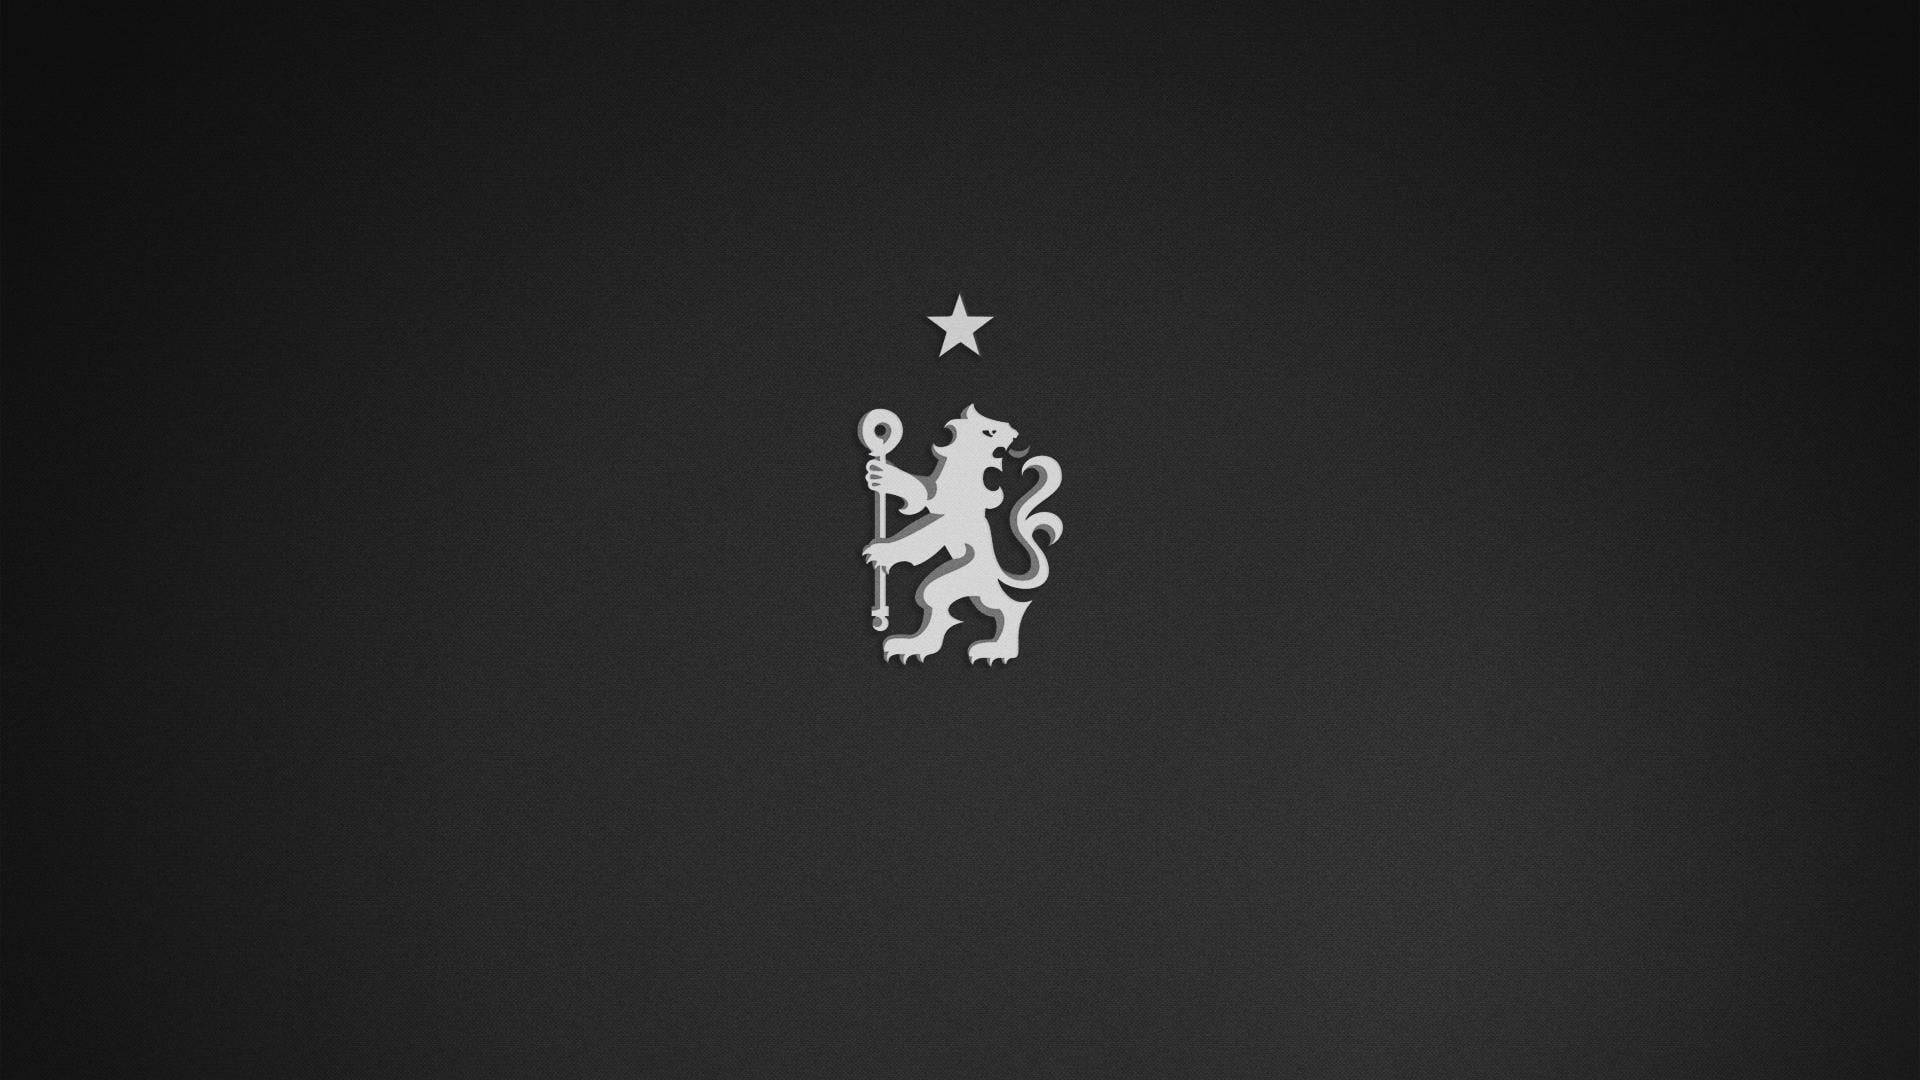 Monochrome Chelsea Fc Logo Wallpaper